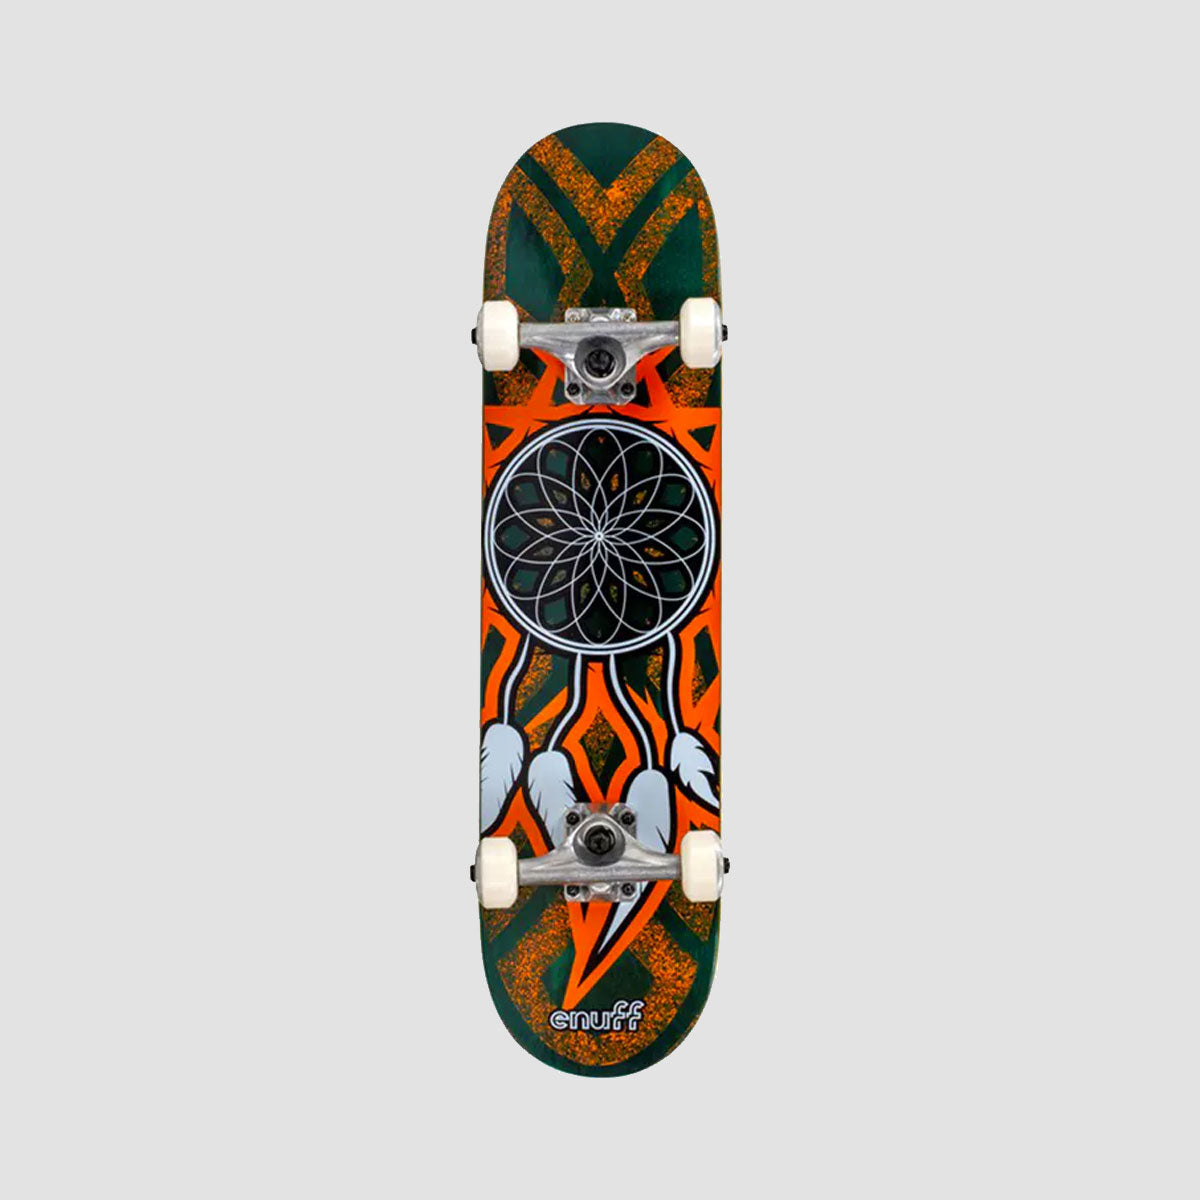 Enuff Dreamcatcher Mini Skateboard Teal/Orange - 7.25"